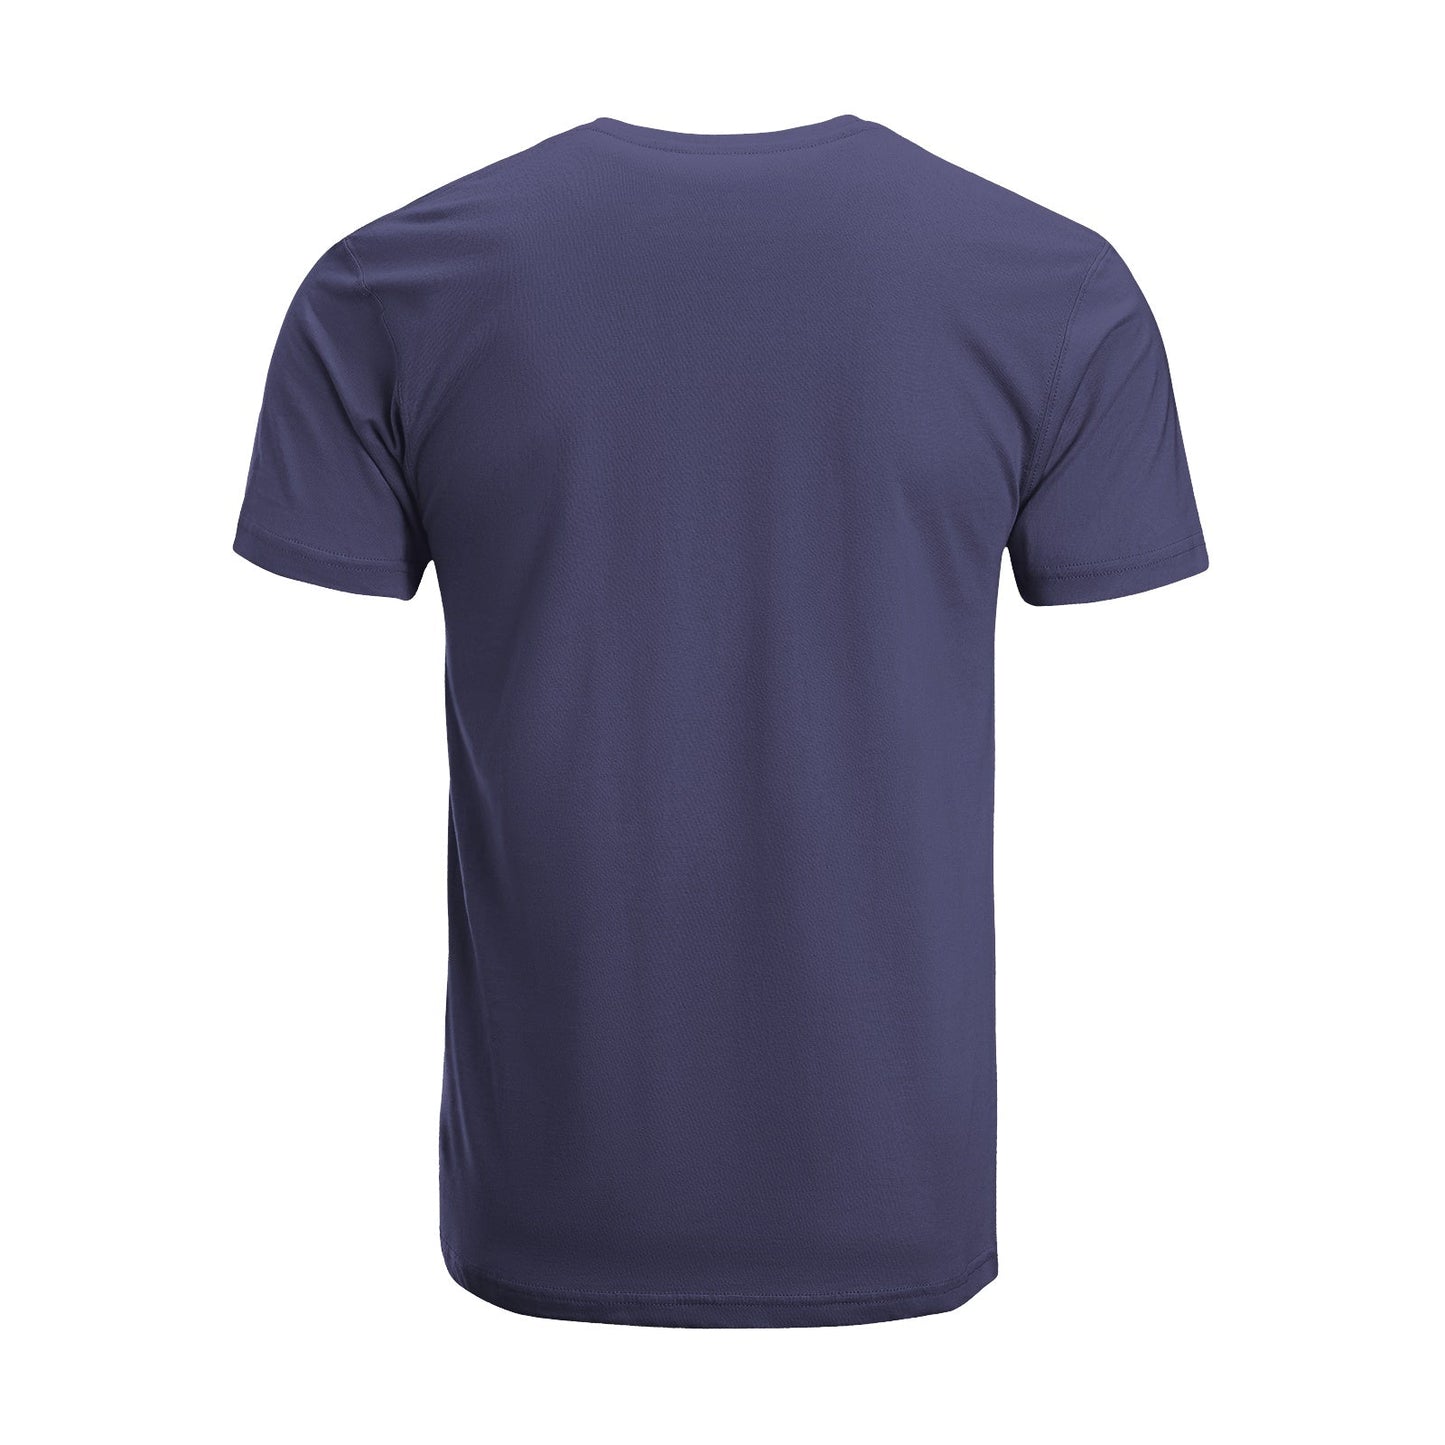 Unisex Short Sleeve Crew Neck Cotton Jersey T-Shirt DOG 03 - Tara-Outfits.com